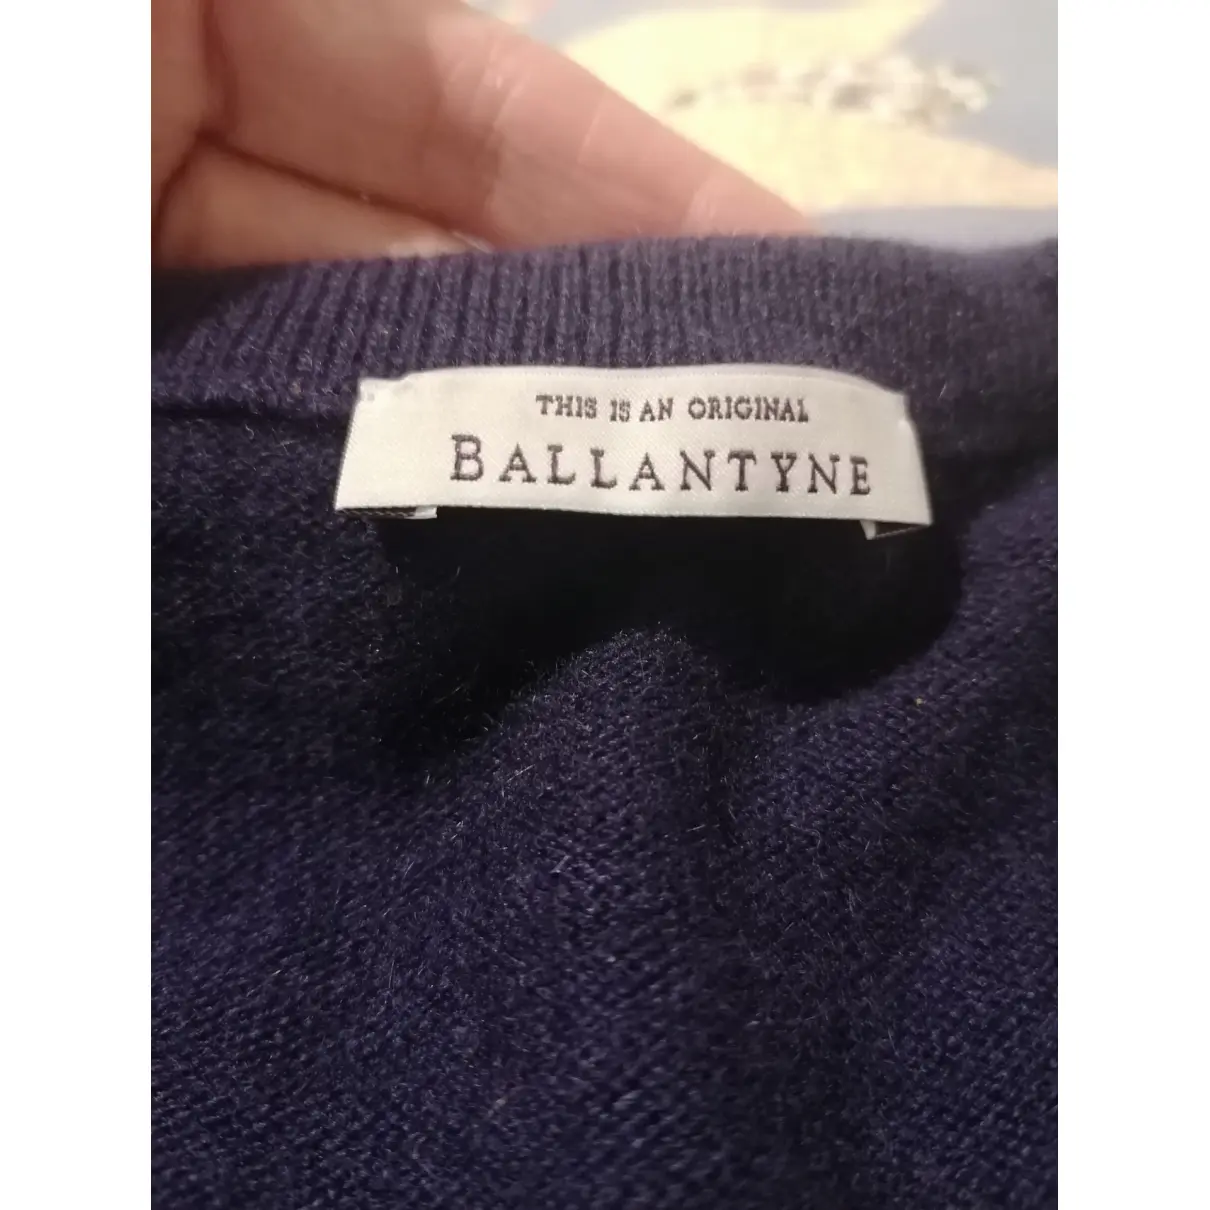 Buy Ballantyne Cashmere jumper online